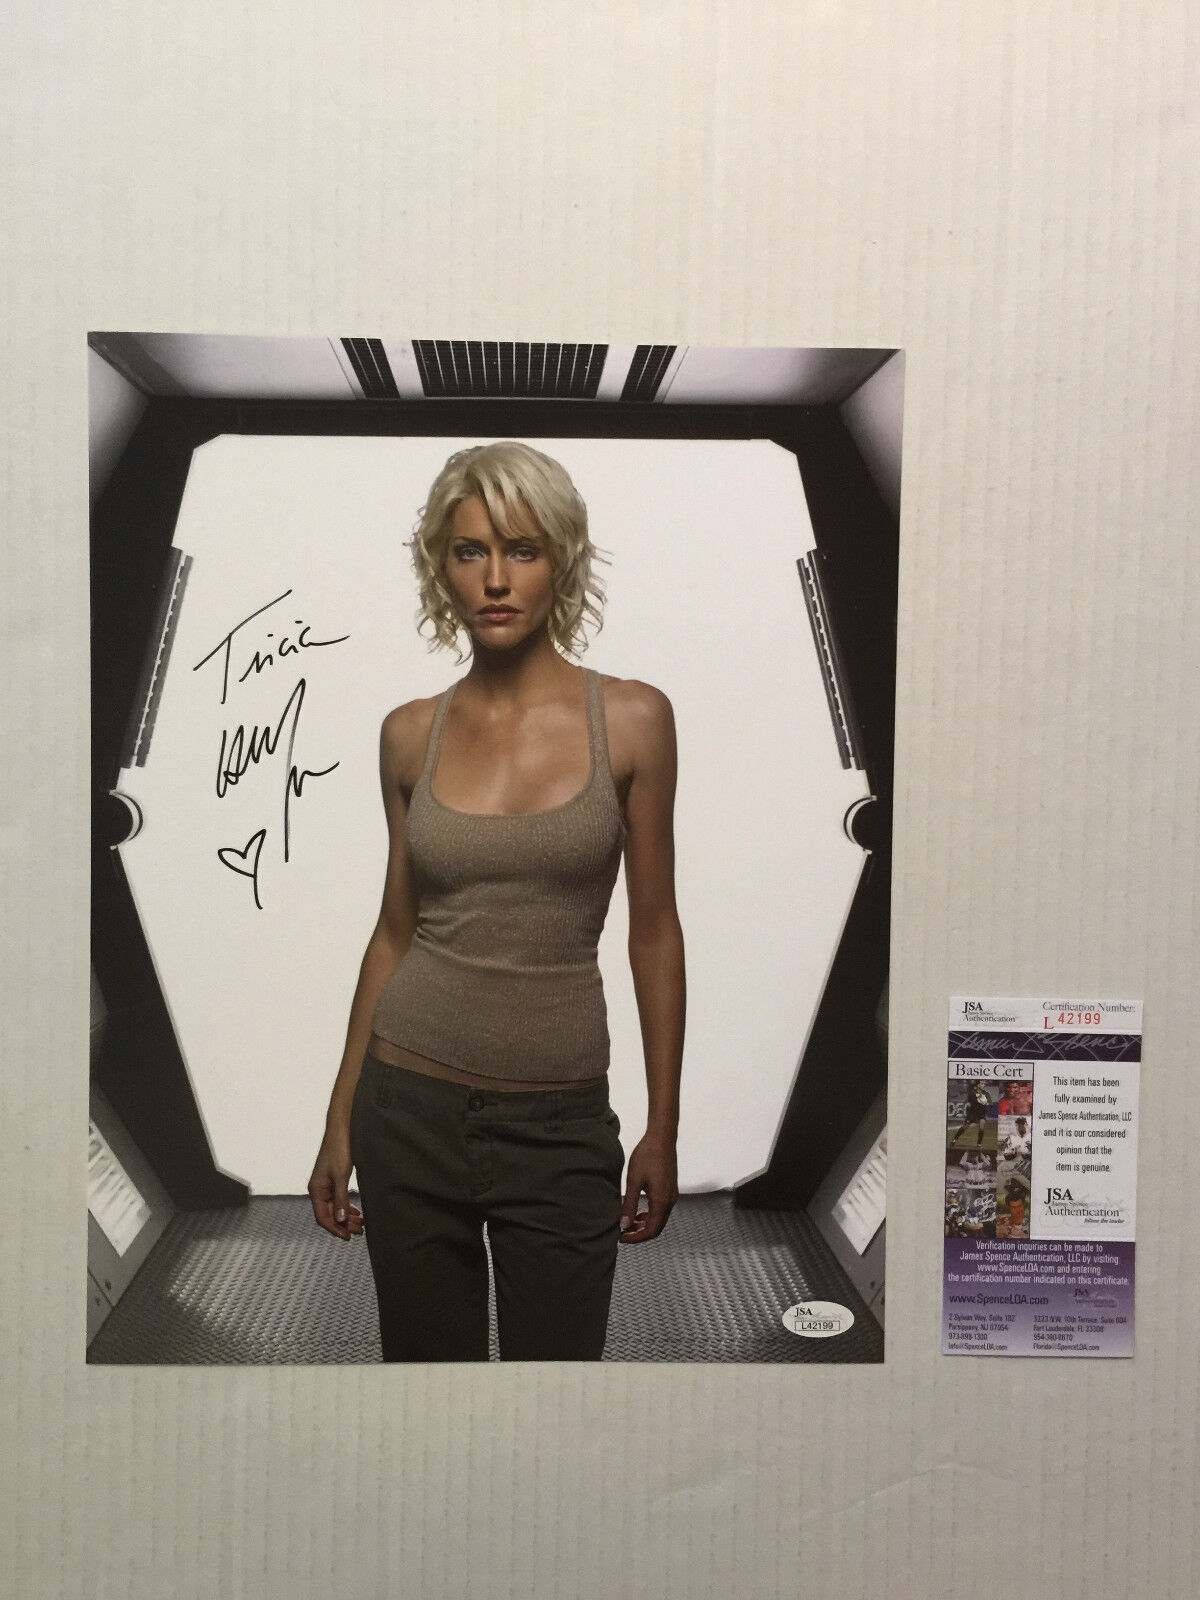 Tricia Helfer Battlestar Galactica Autograph Signed Photo JSA 11 x14 #1